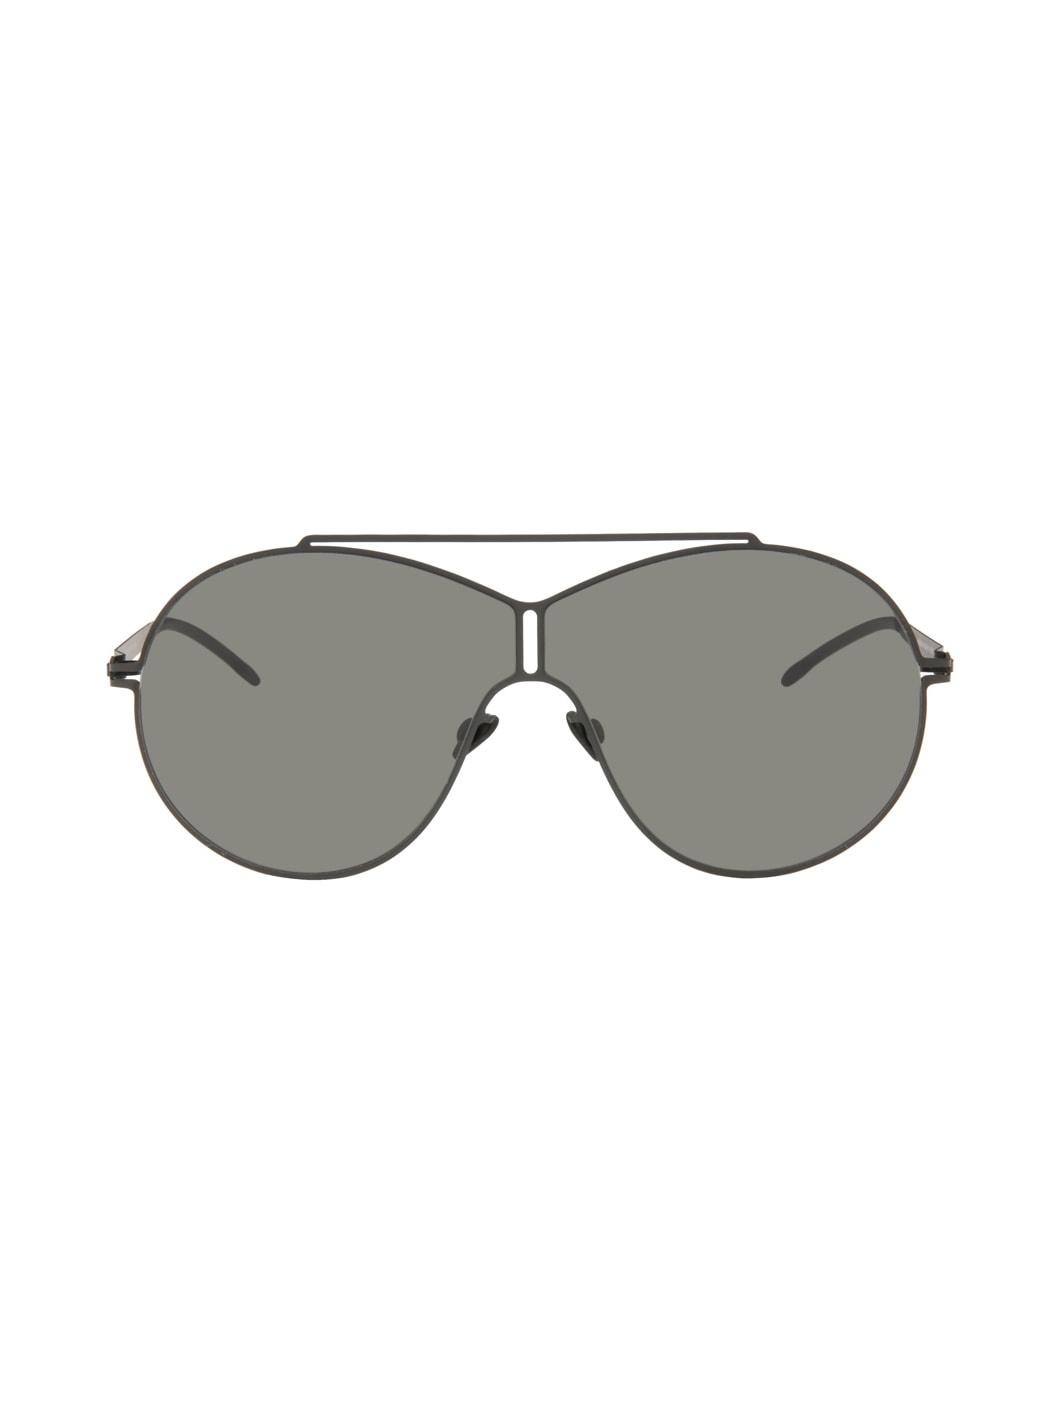 Black Studio 12.5 Sunglasses - 1